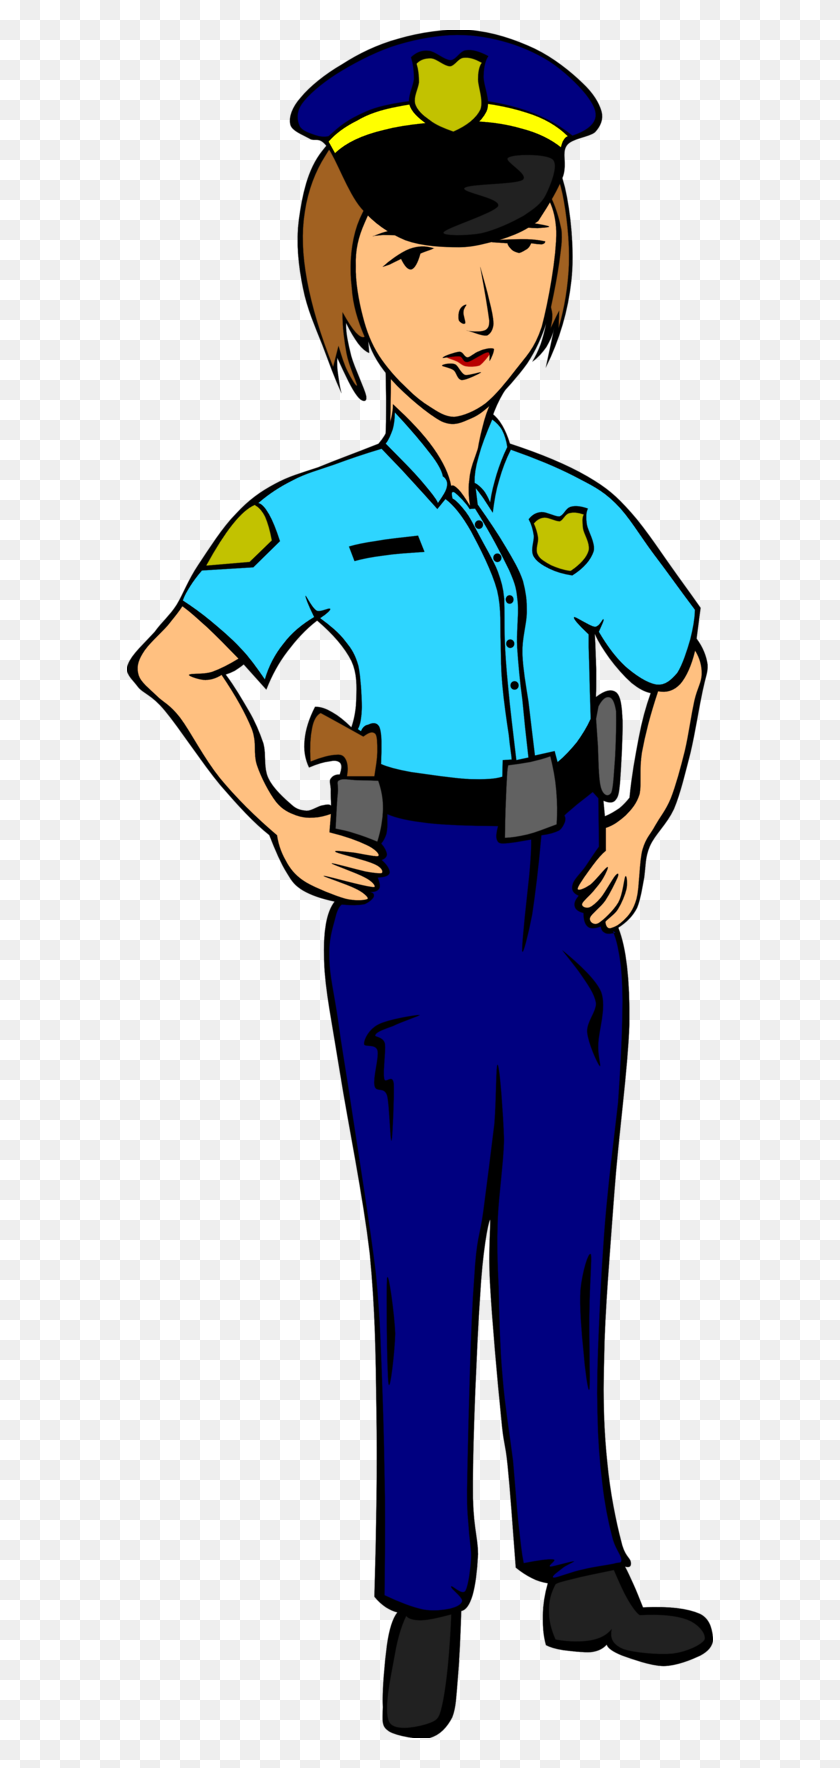 586x1708 Policeman Clip Art Free - Policia Clipart